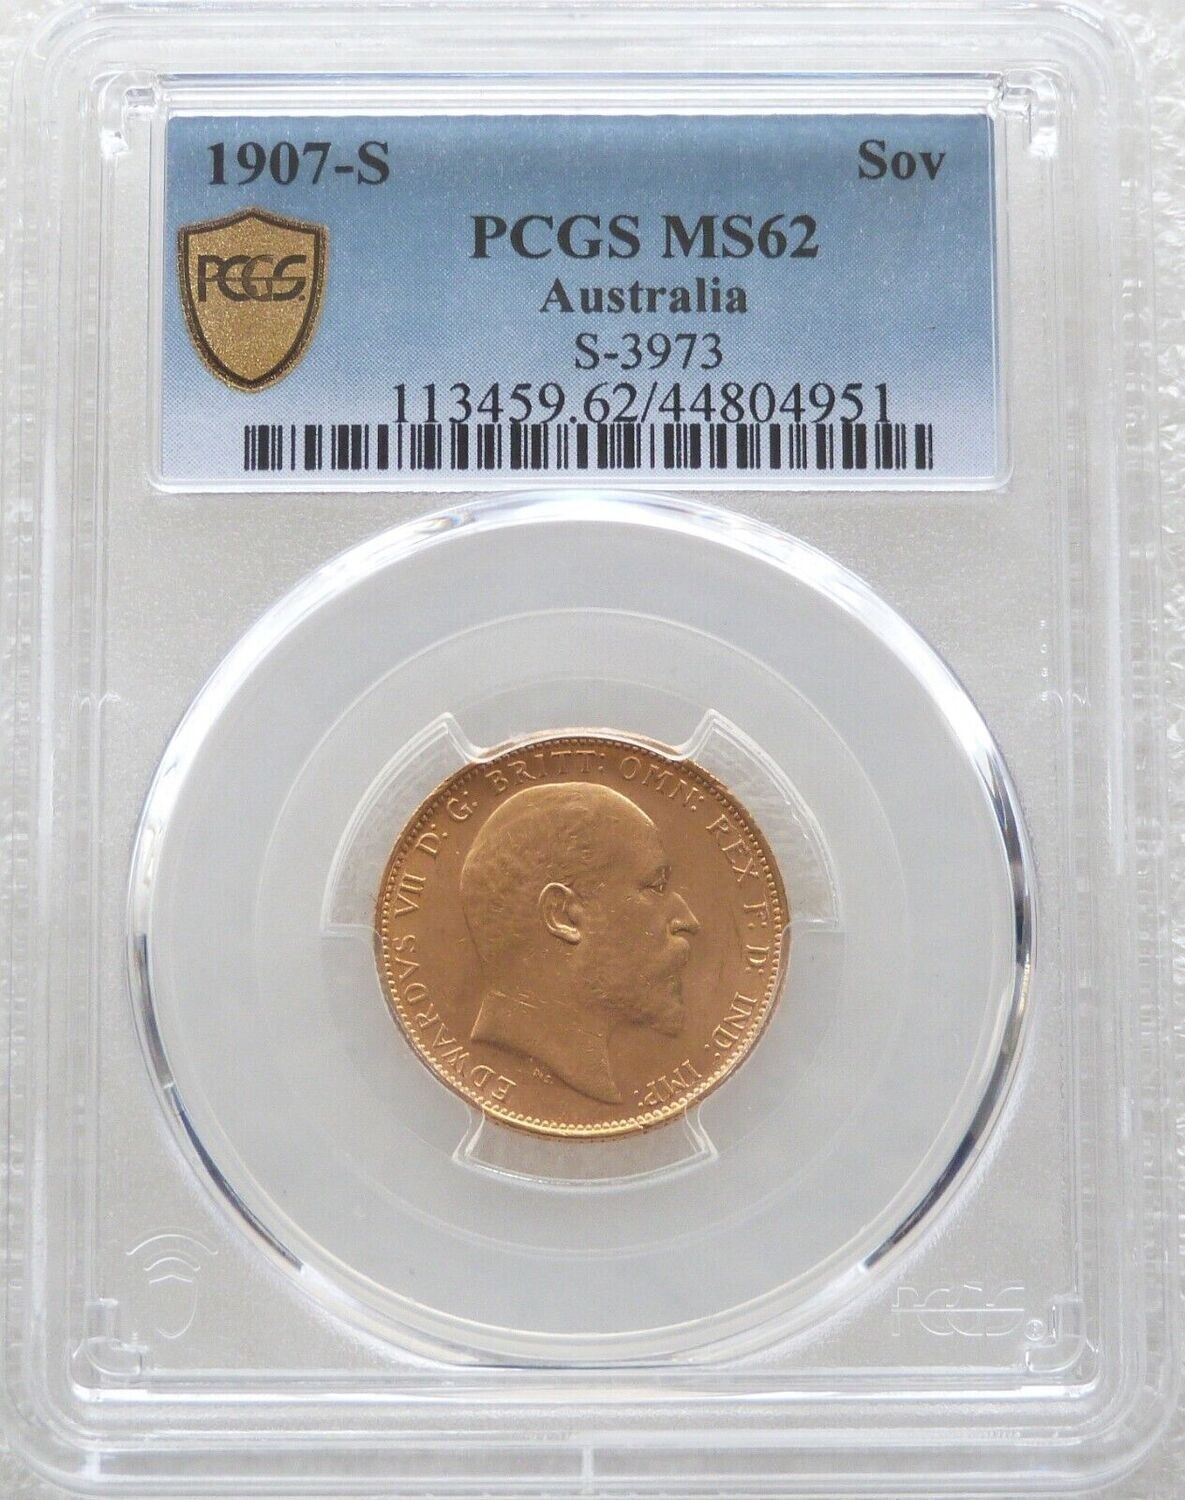 1907-S Australia Sydney Edward VII Full Sovereign Gold Coin PCGS MS62